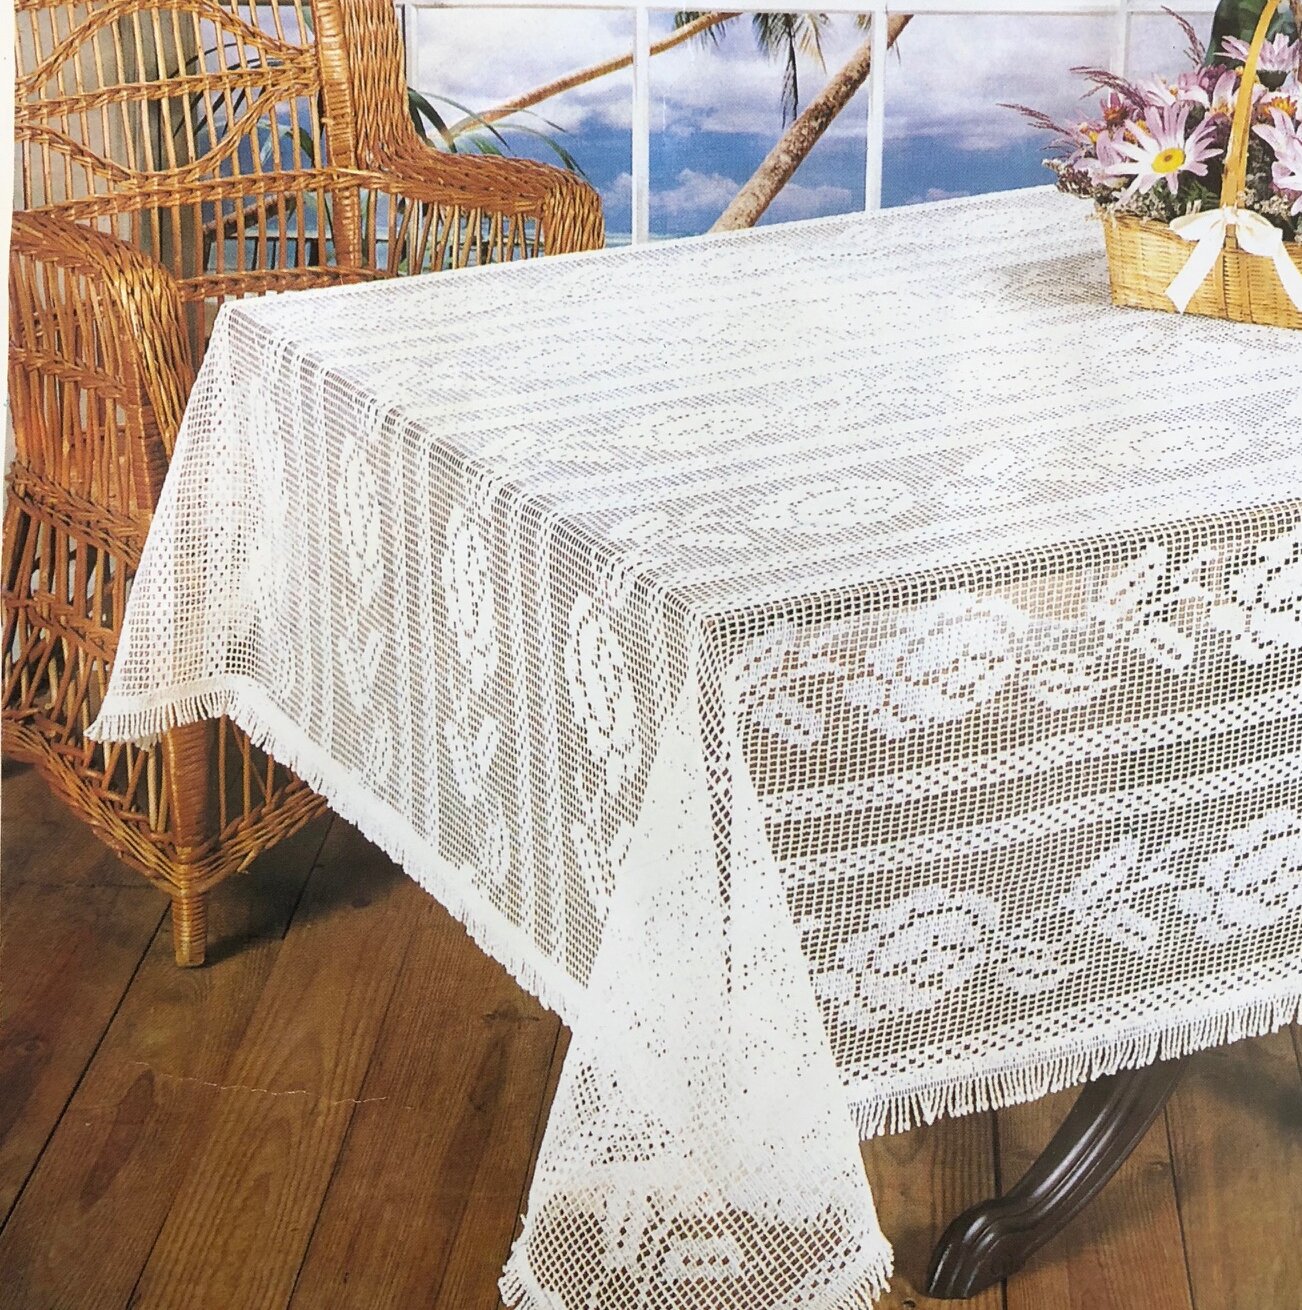 beautiful tablecloths